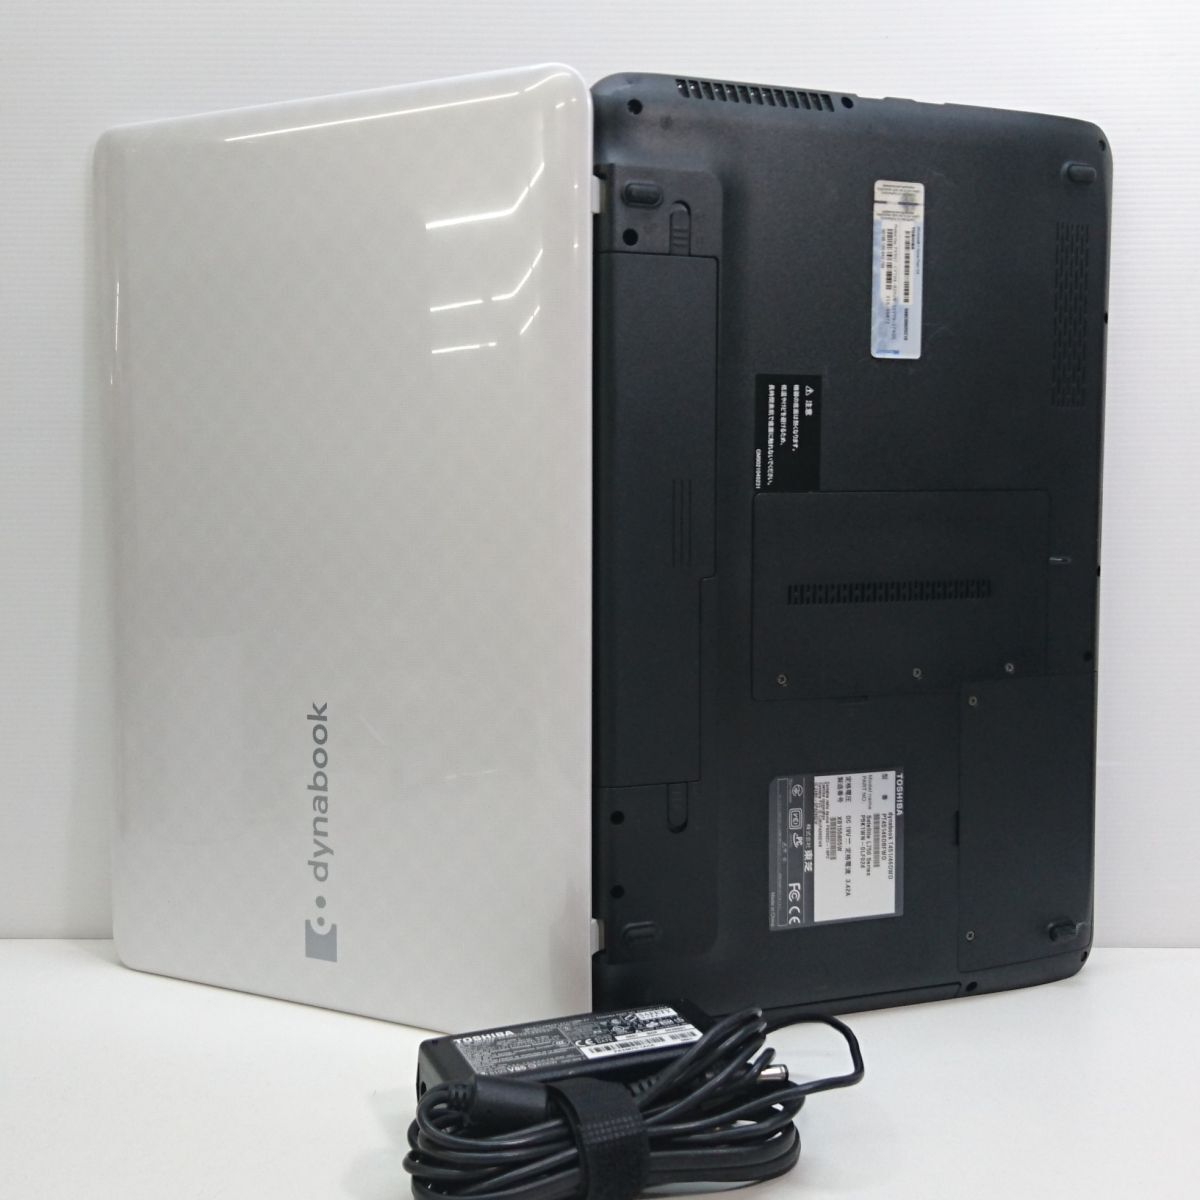  present condition goods TOSHIBA 15.6 -inch dynabook T451/46DWD Win11/Core i5-2430M [M8103]